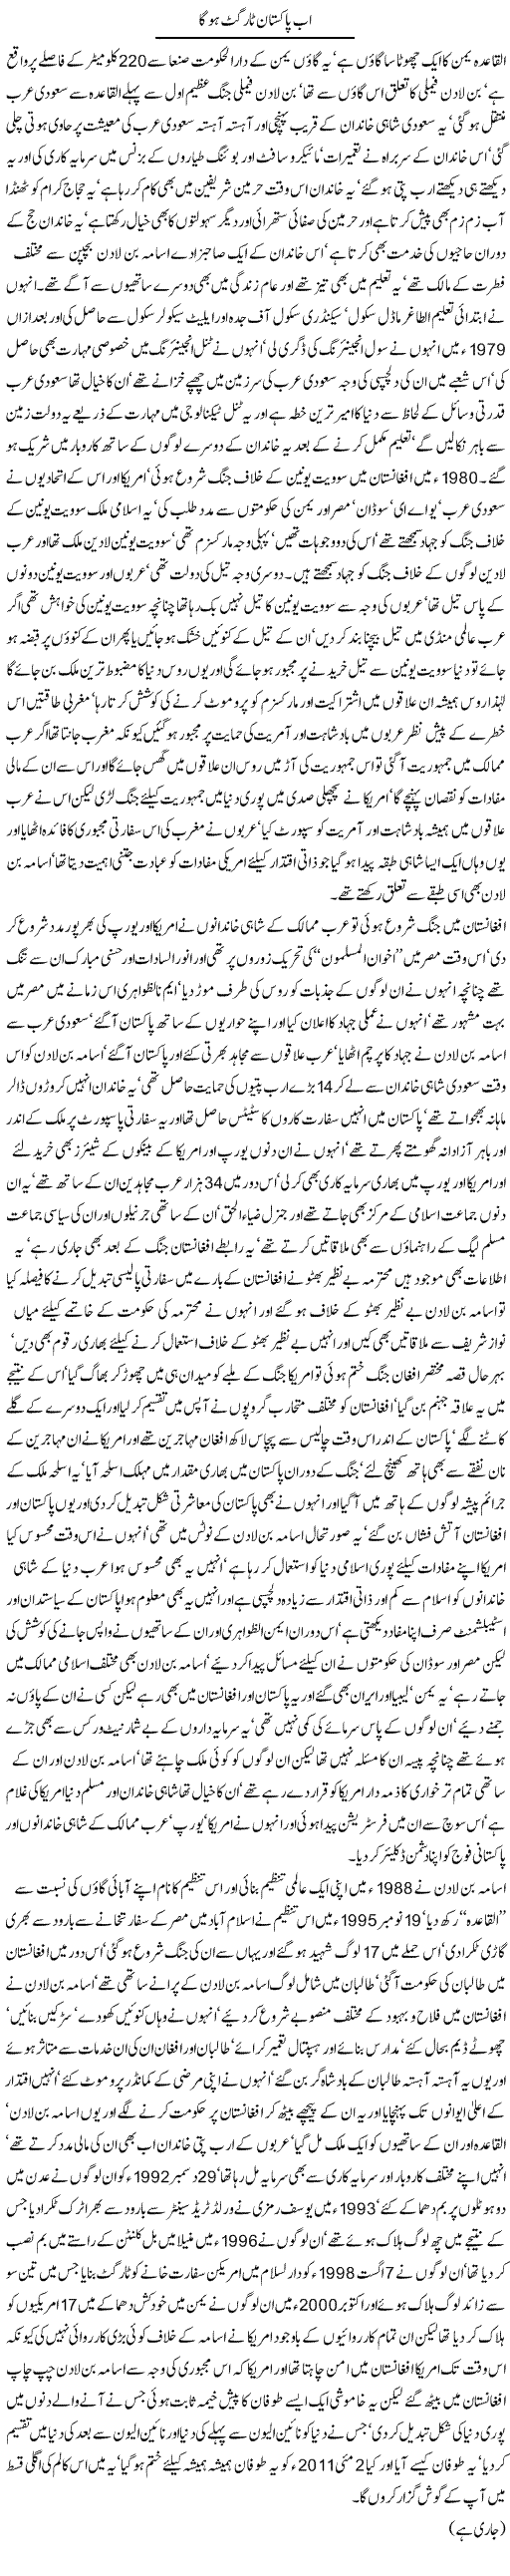 Pakistan Under Target Express Column Javed Chaudhry 3 May 2011